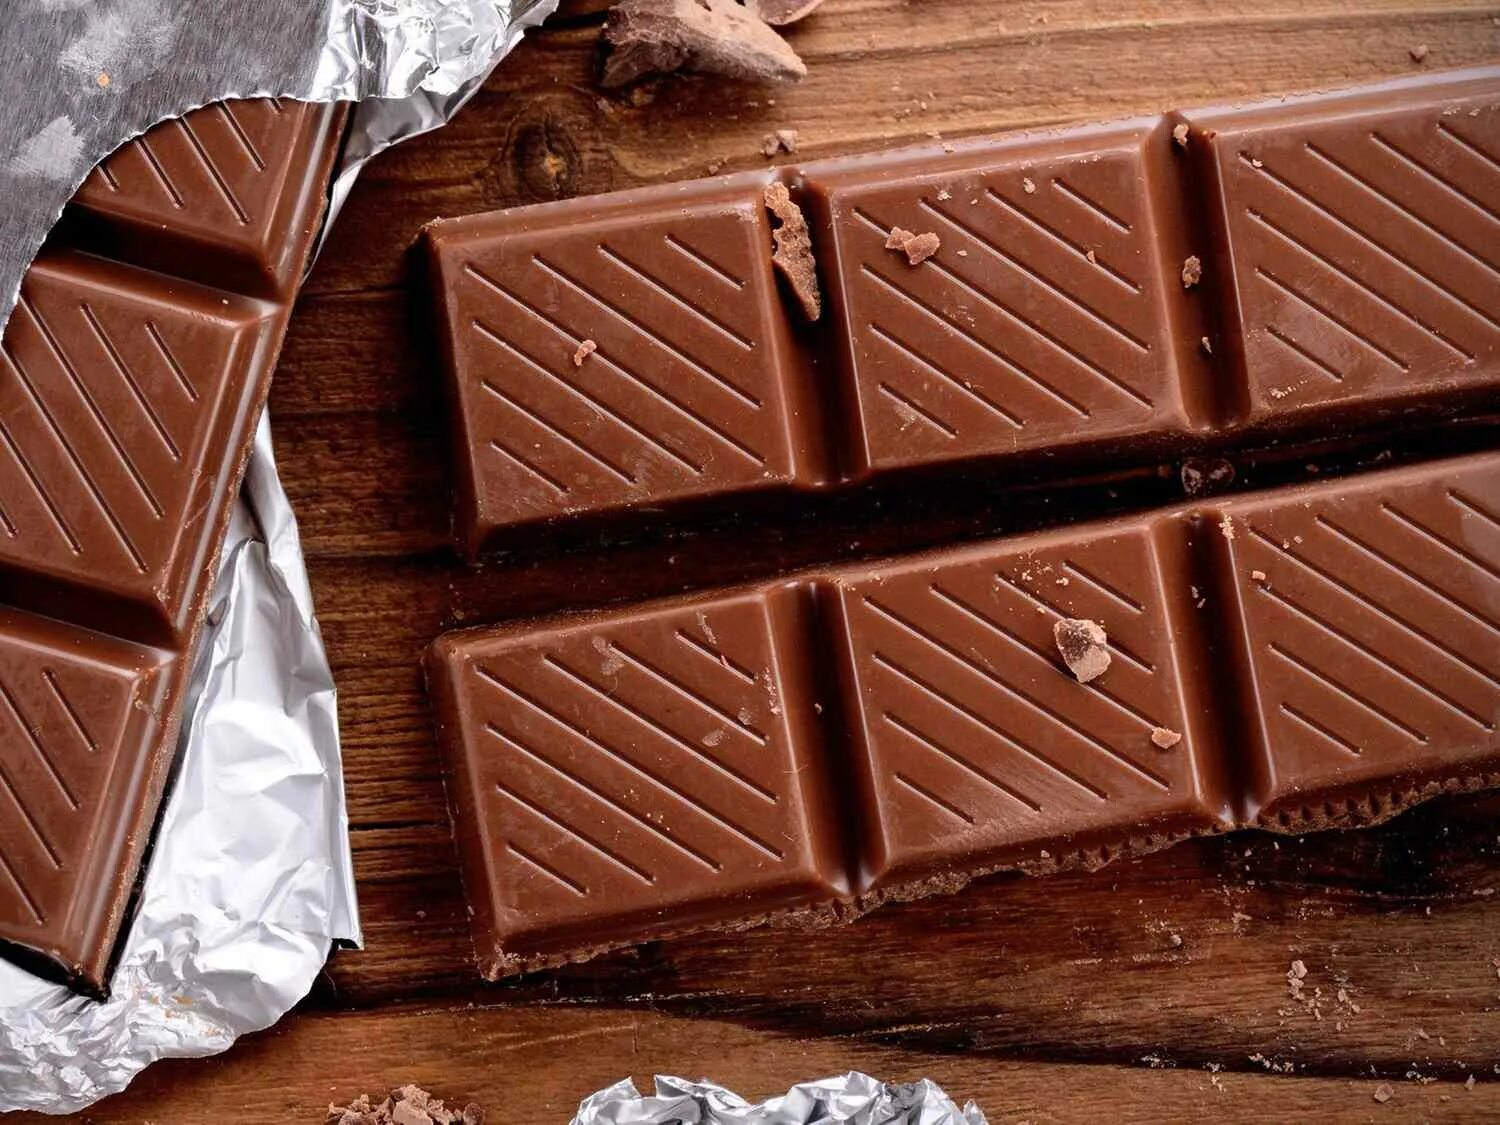 Bar of chocolate. Шоколад. Шоколад Сток. Chocolate Bar. Шоколад 10.